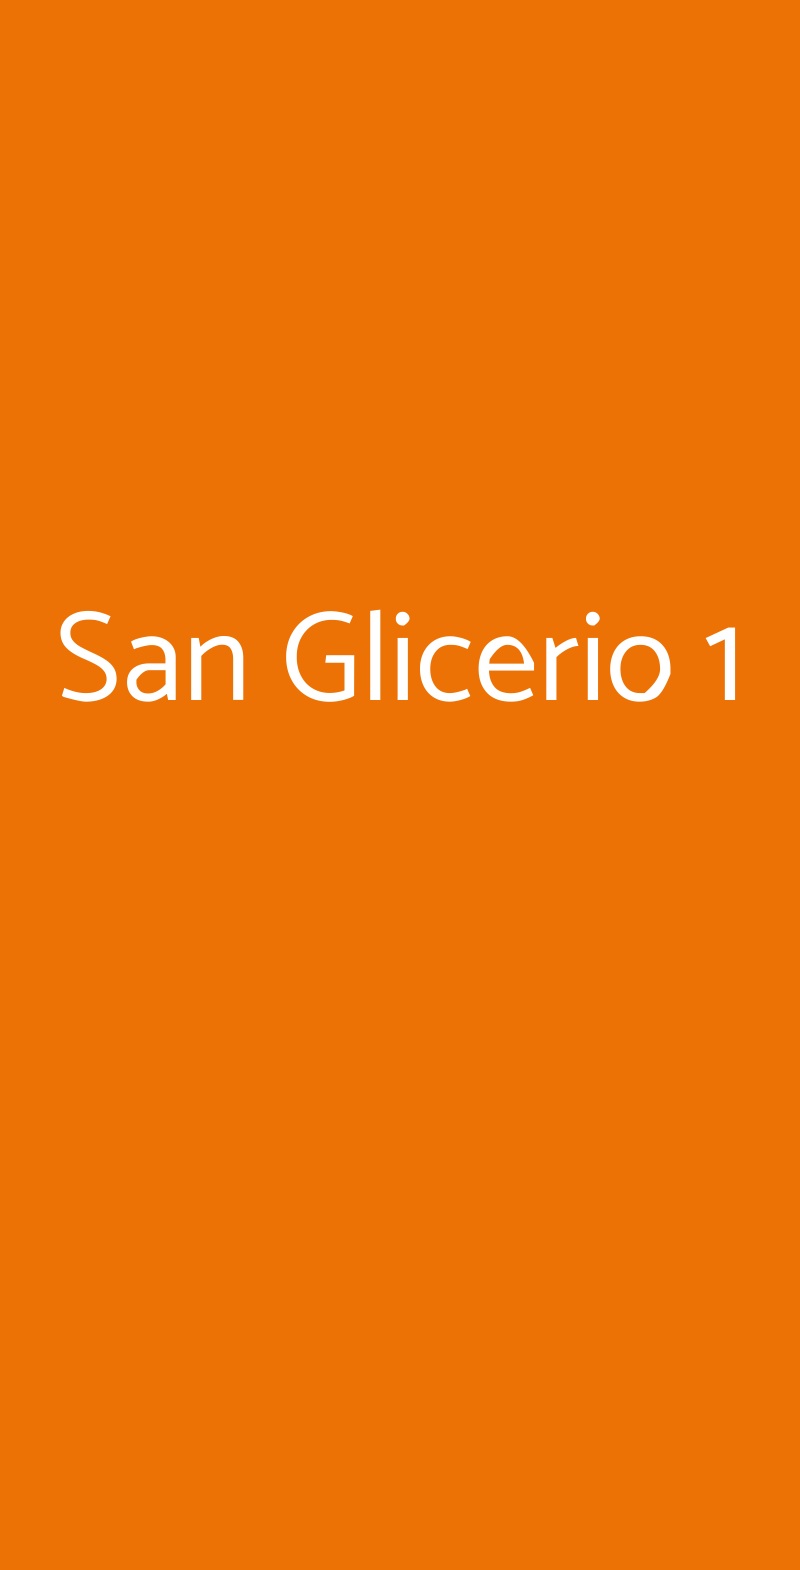 San Glicerio 1 Milano menù 1 pagina